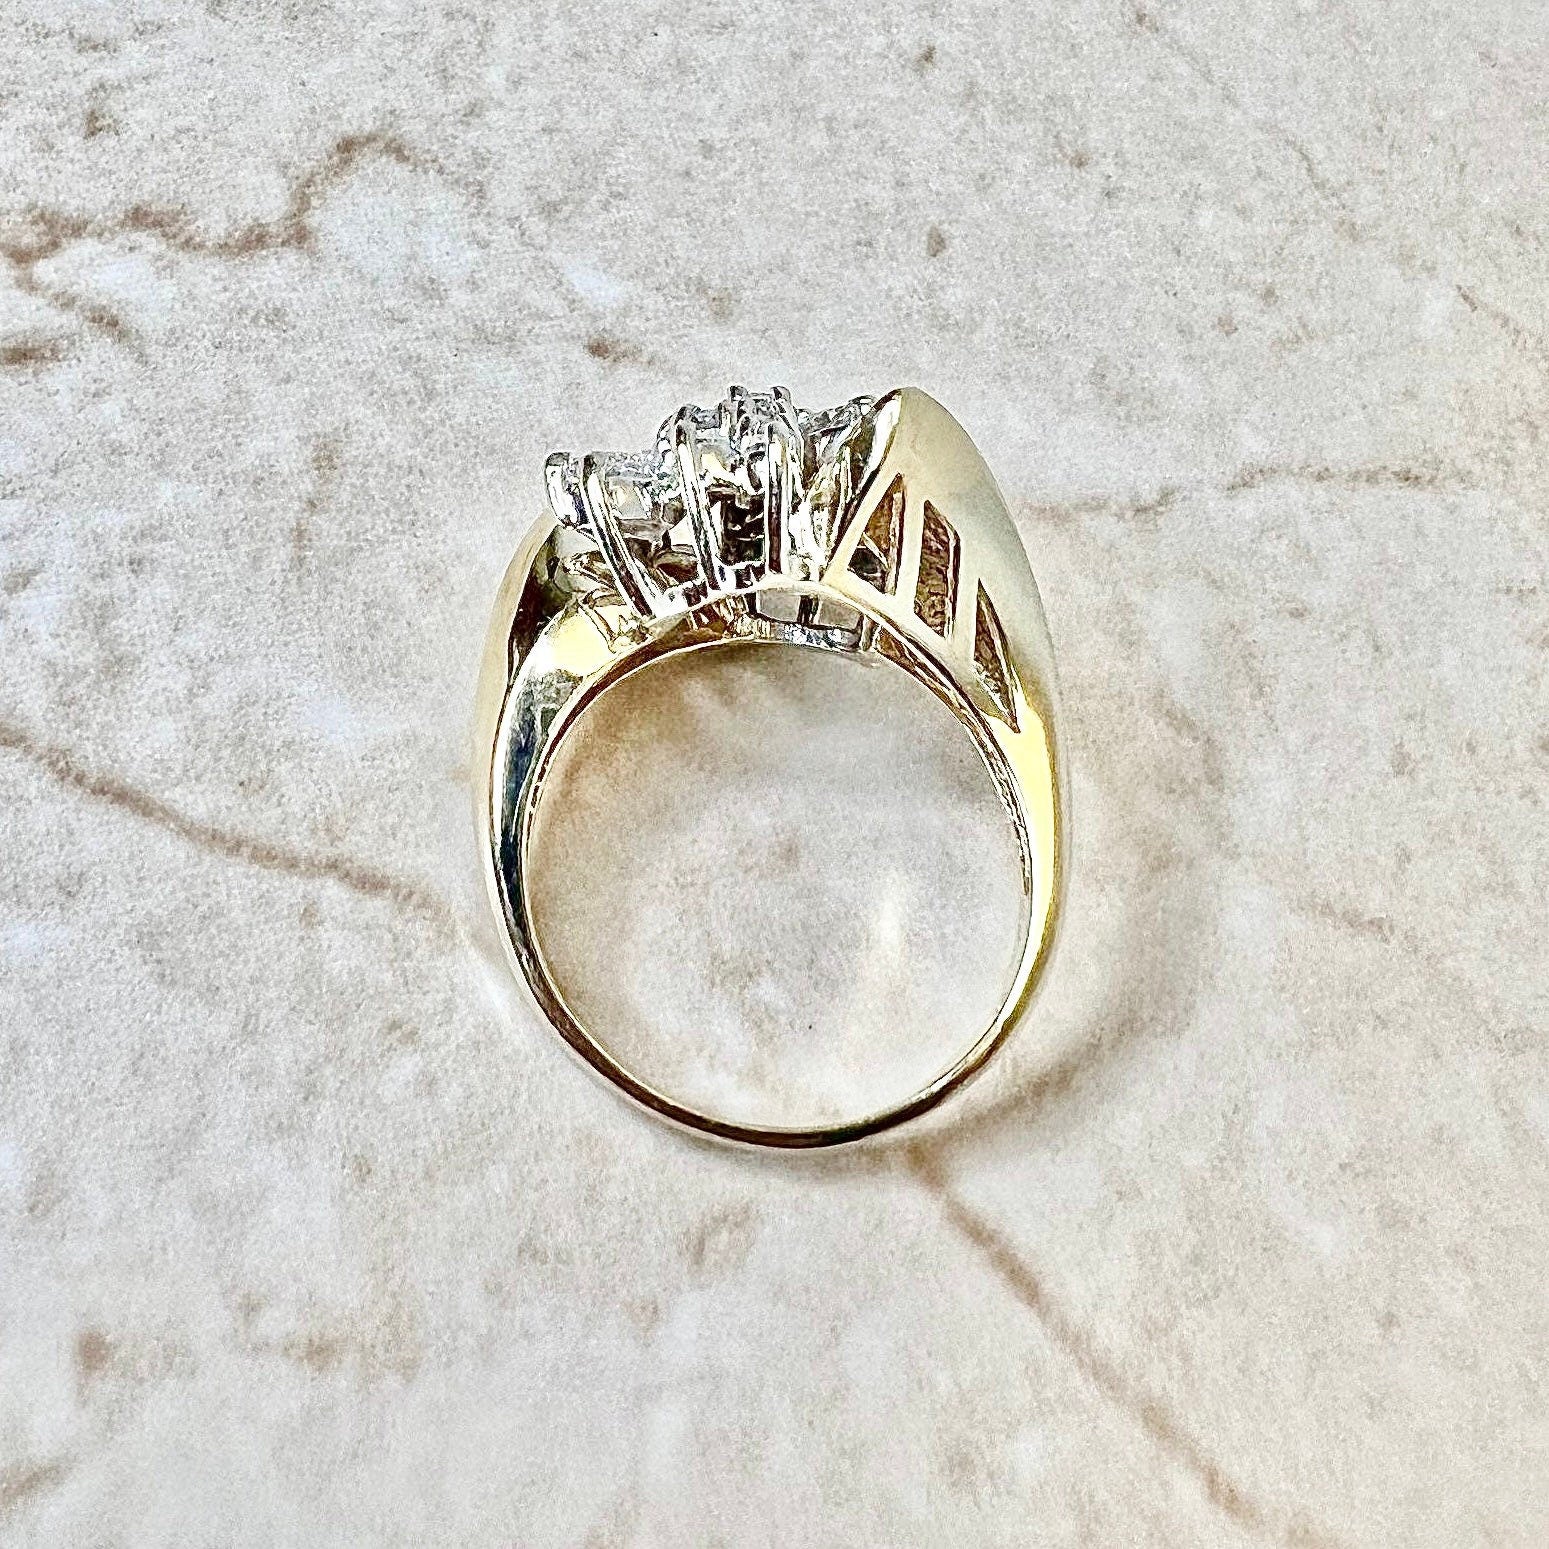 1 CTTW Vintage 14K Diamond Cluster Ring - 14 Karat Two Tone Gold Diamond Ring - Diamond Cocktail Ring - Statement Ring - Anniversary Ring